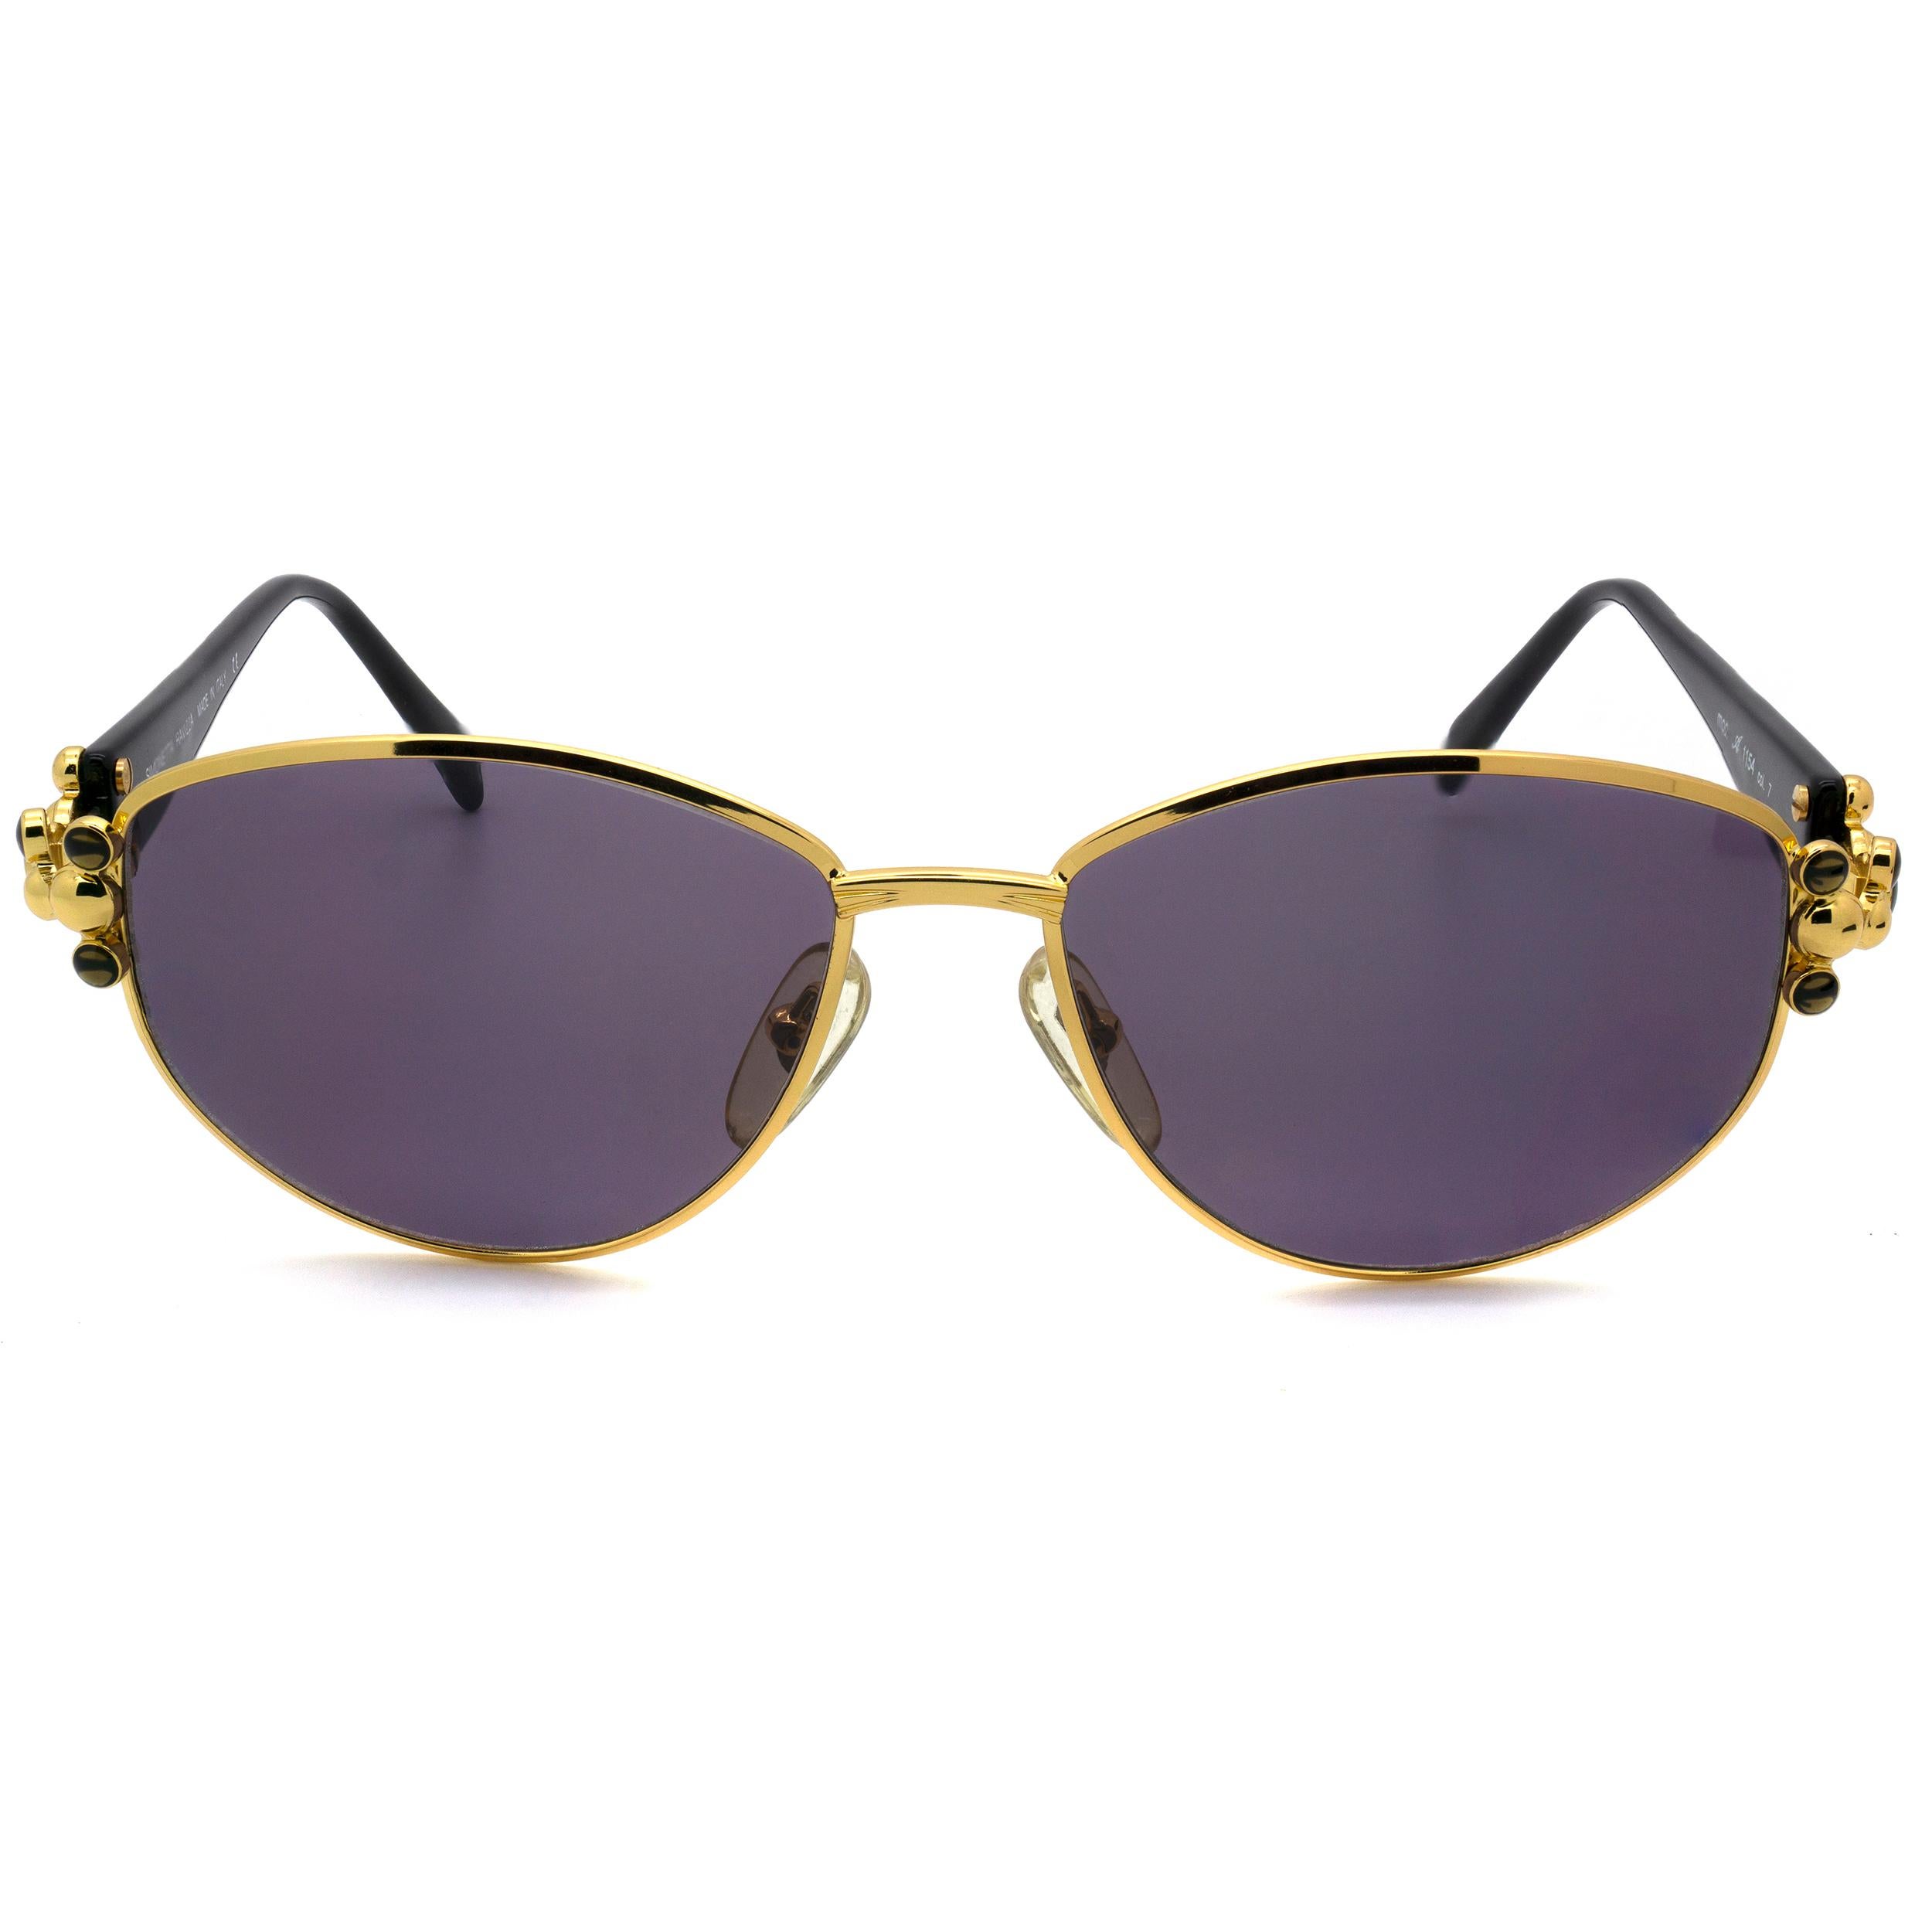 1980 style sunglasses